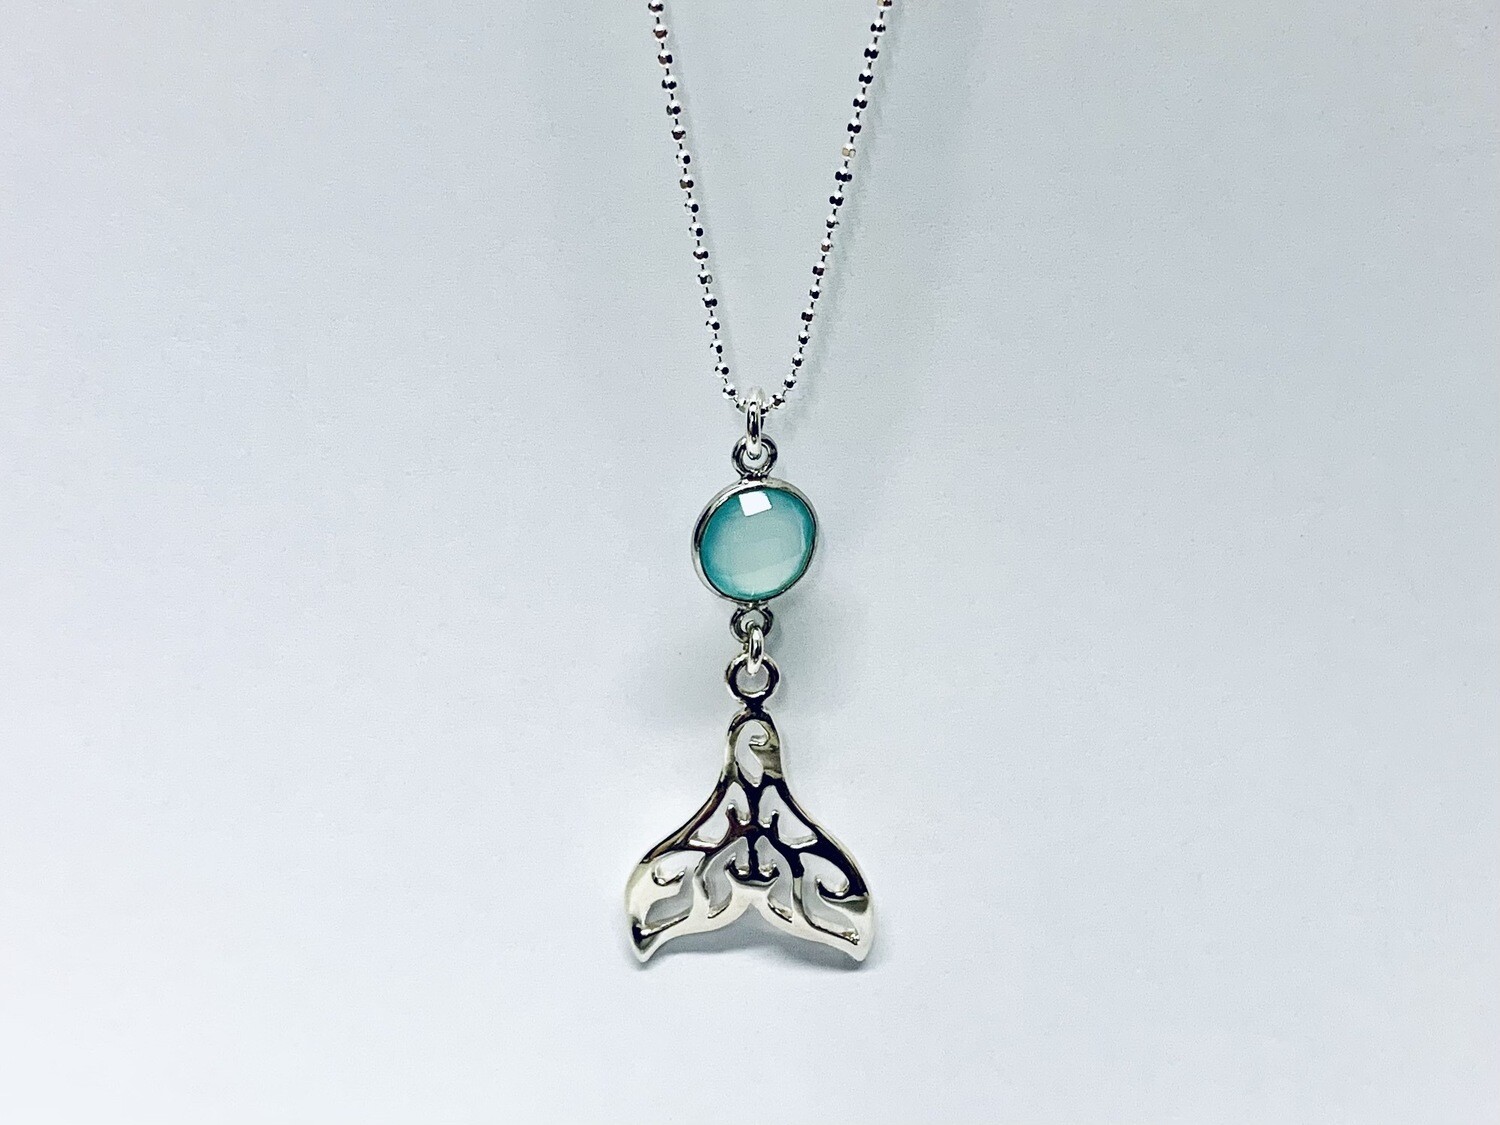 Aqua Gemstone Whale Tail Necklace- Shy Giraffe